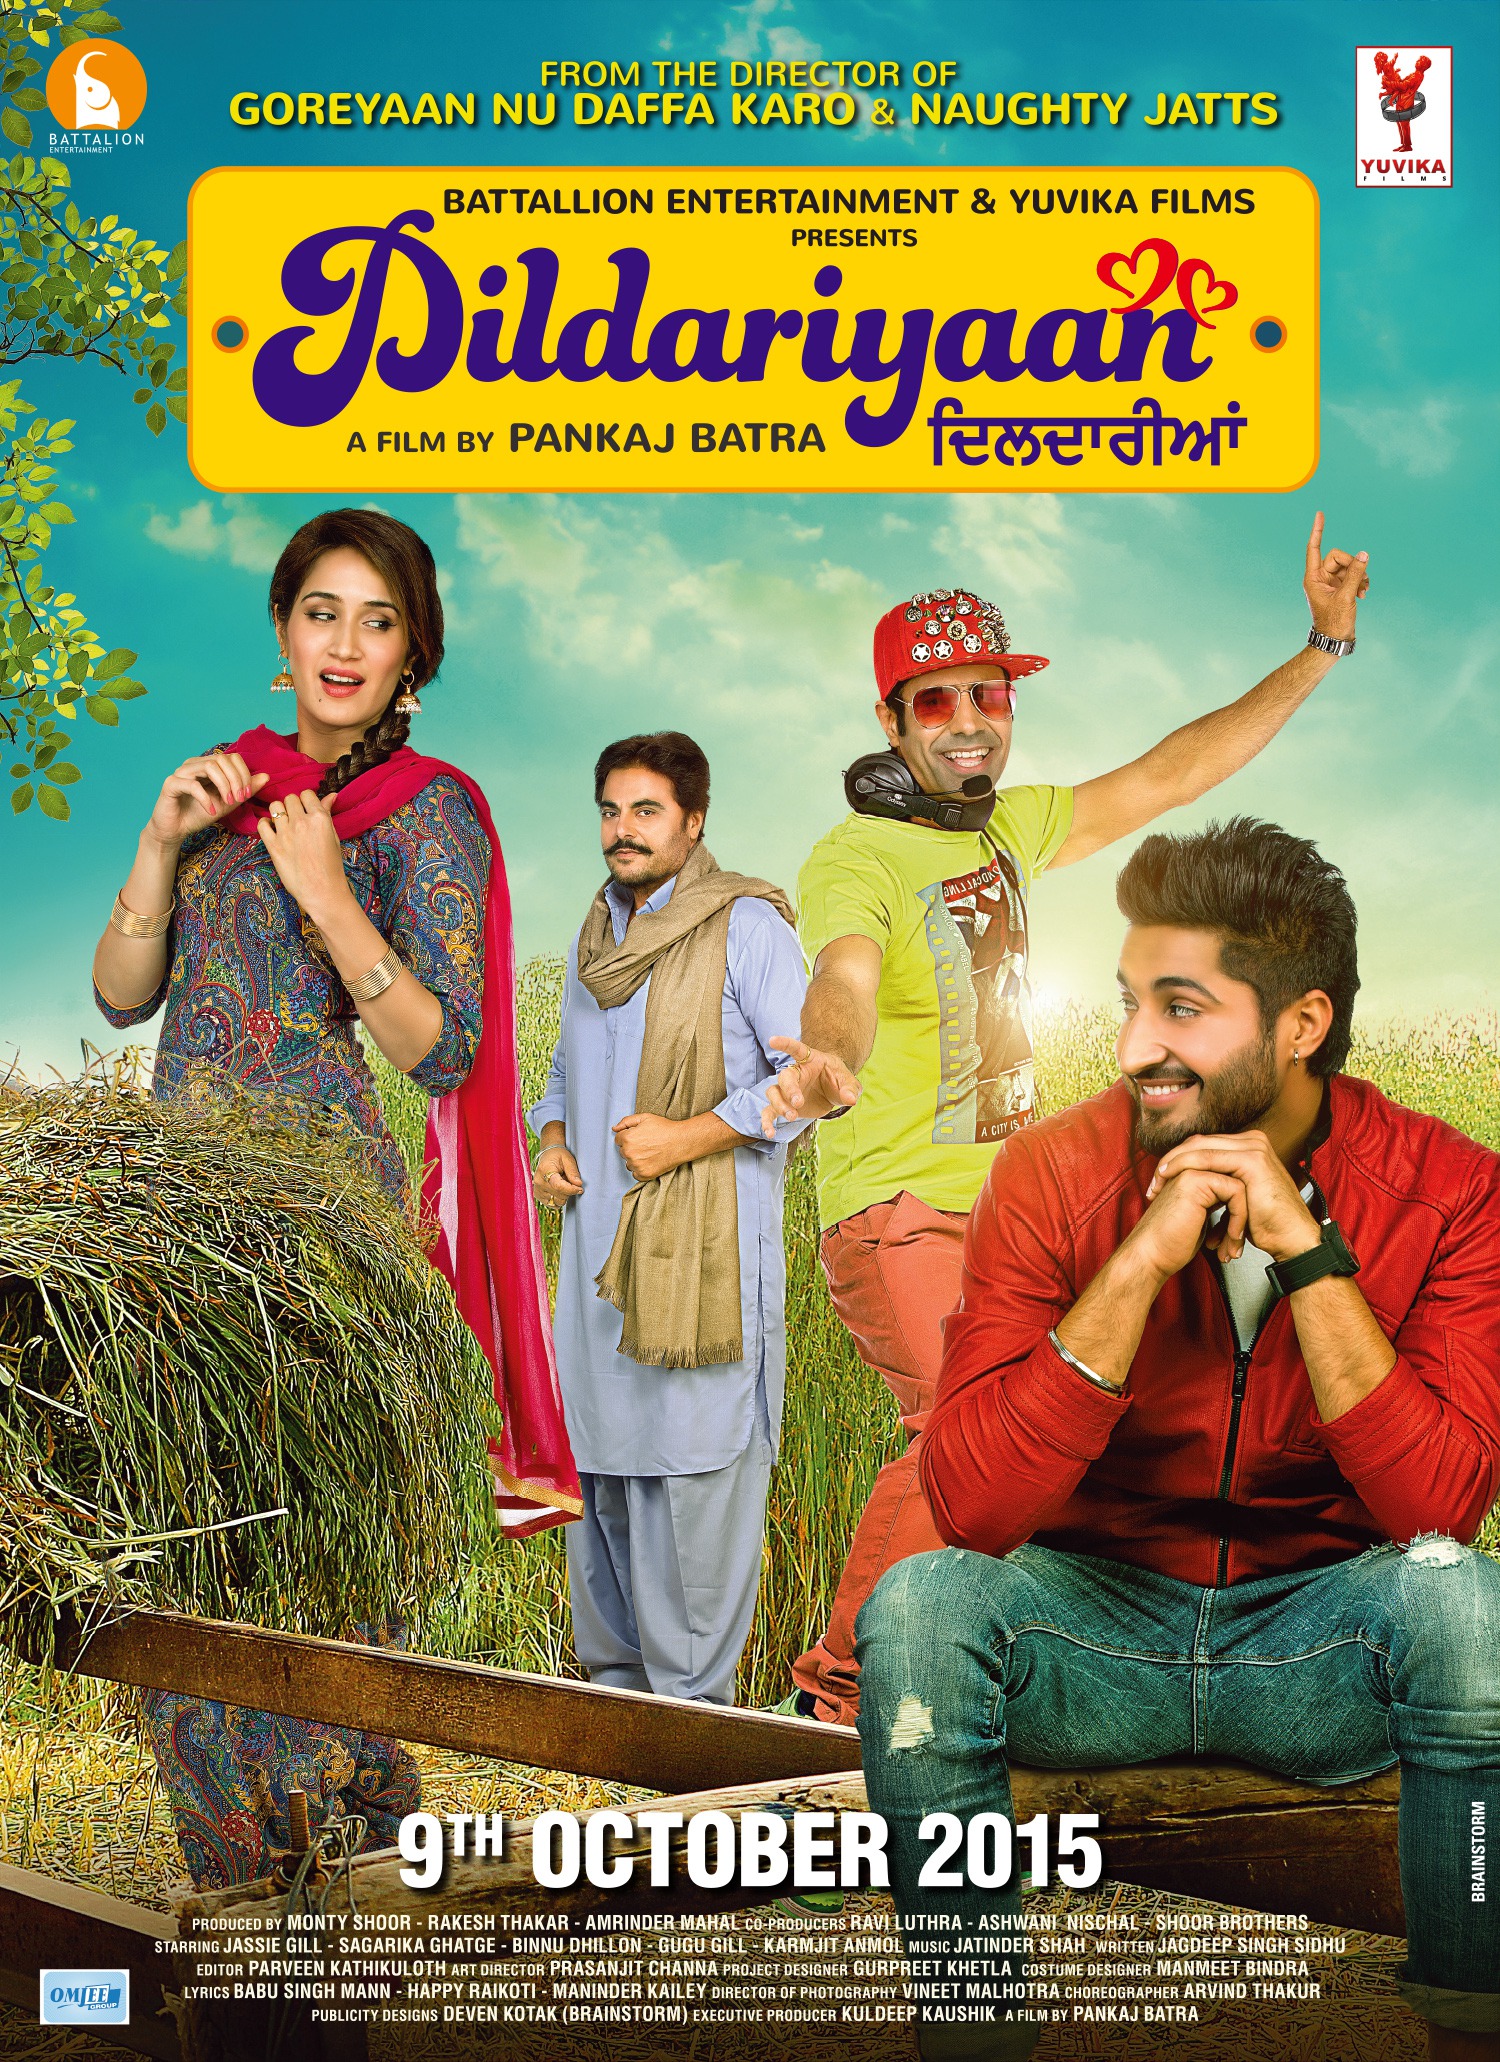 Mega Sized Movie Poster Image for Dildariyaan (#3 of 4)